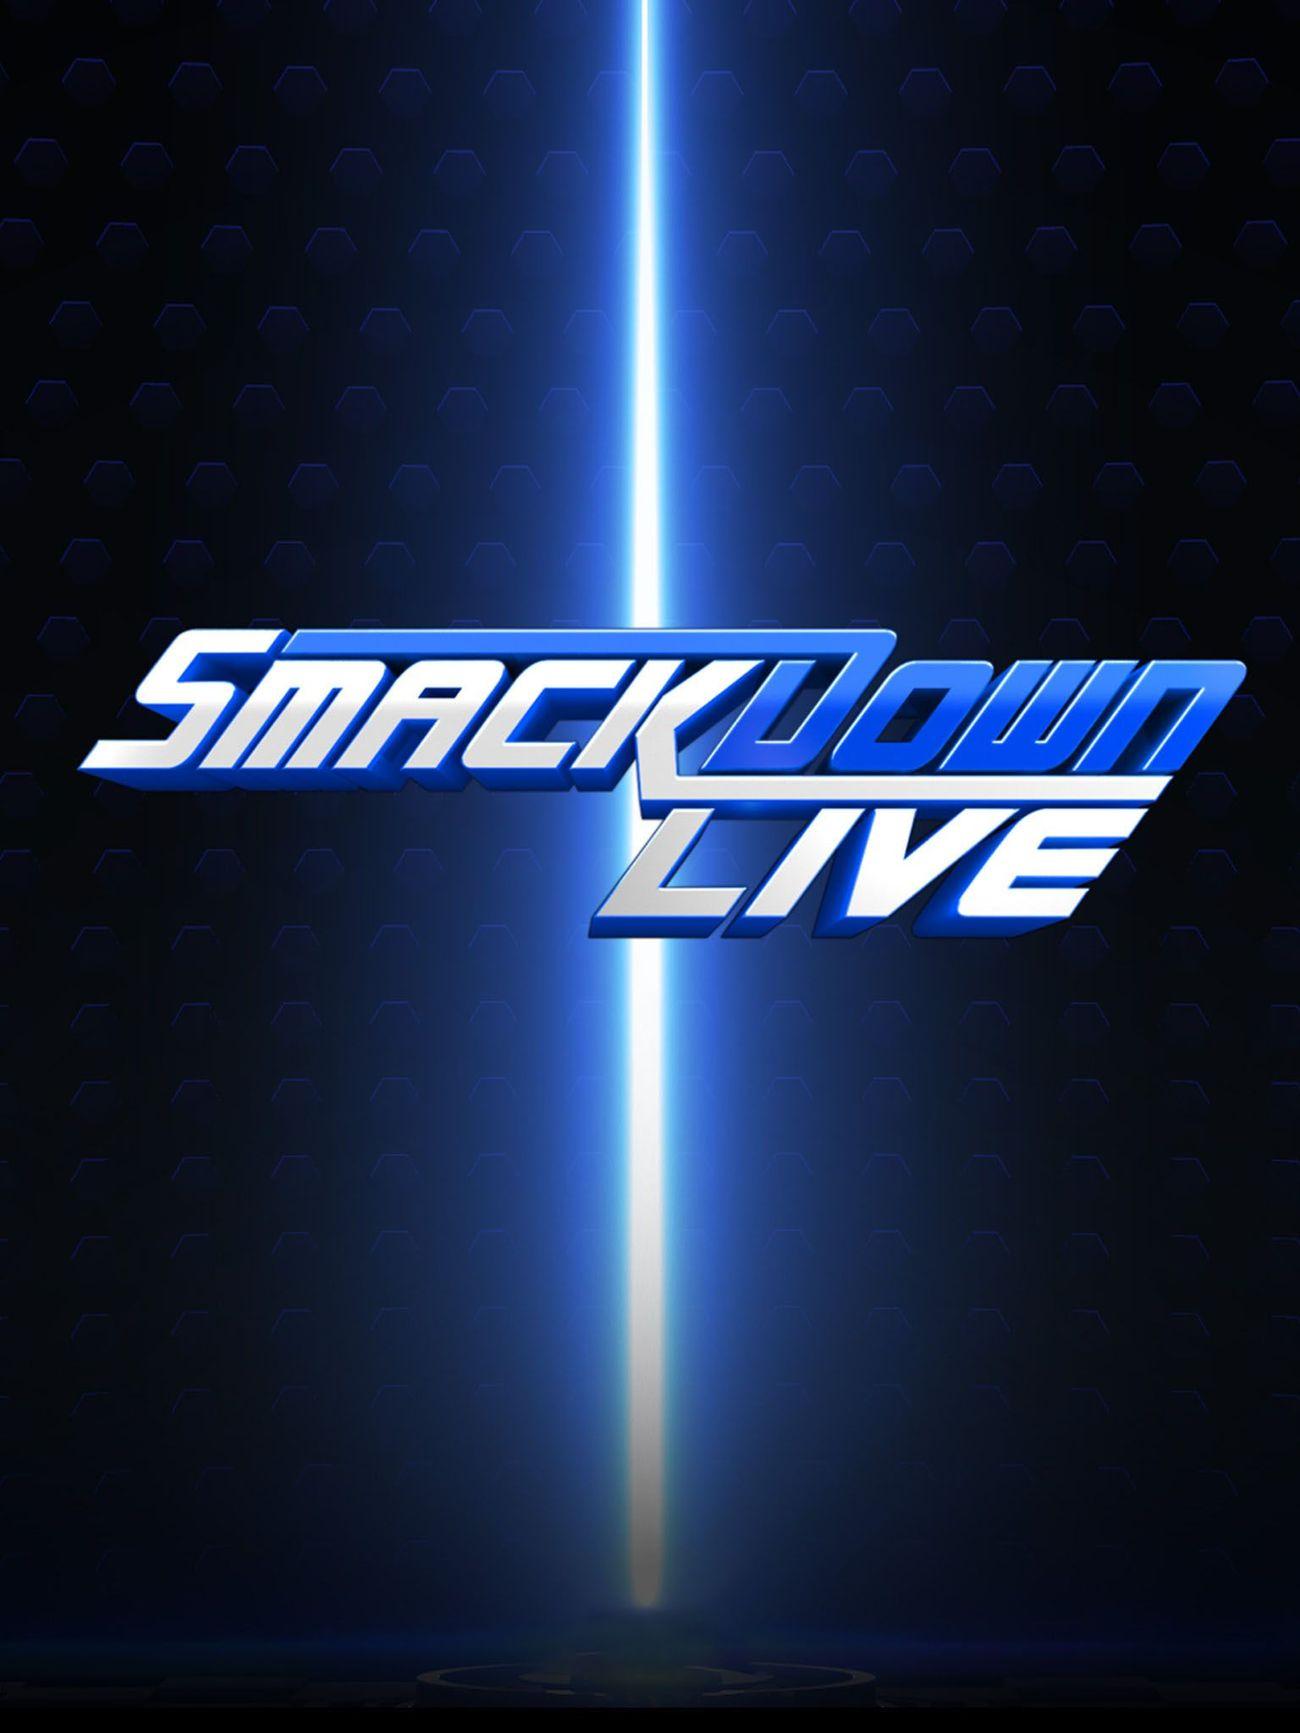 WWE SmackDown Live (TV Series 1999– )